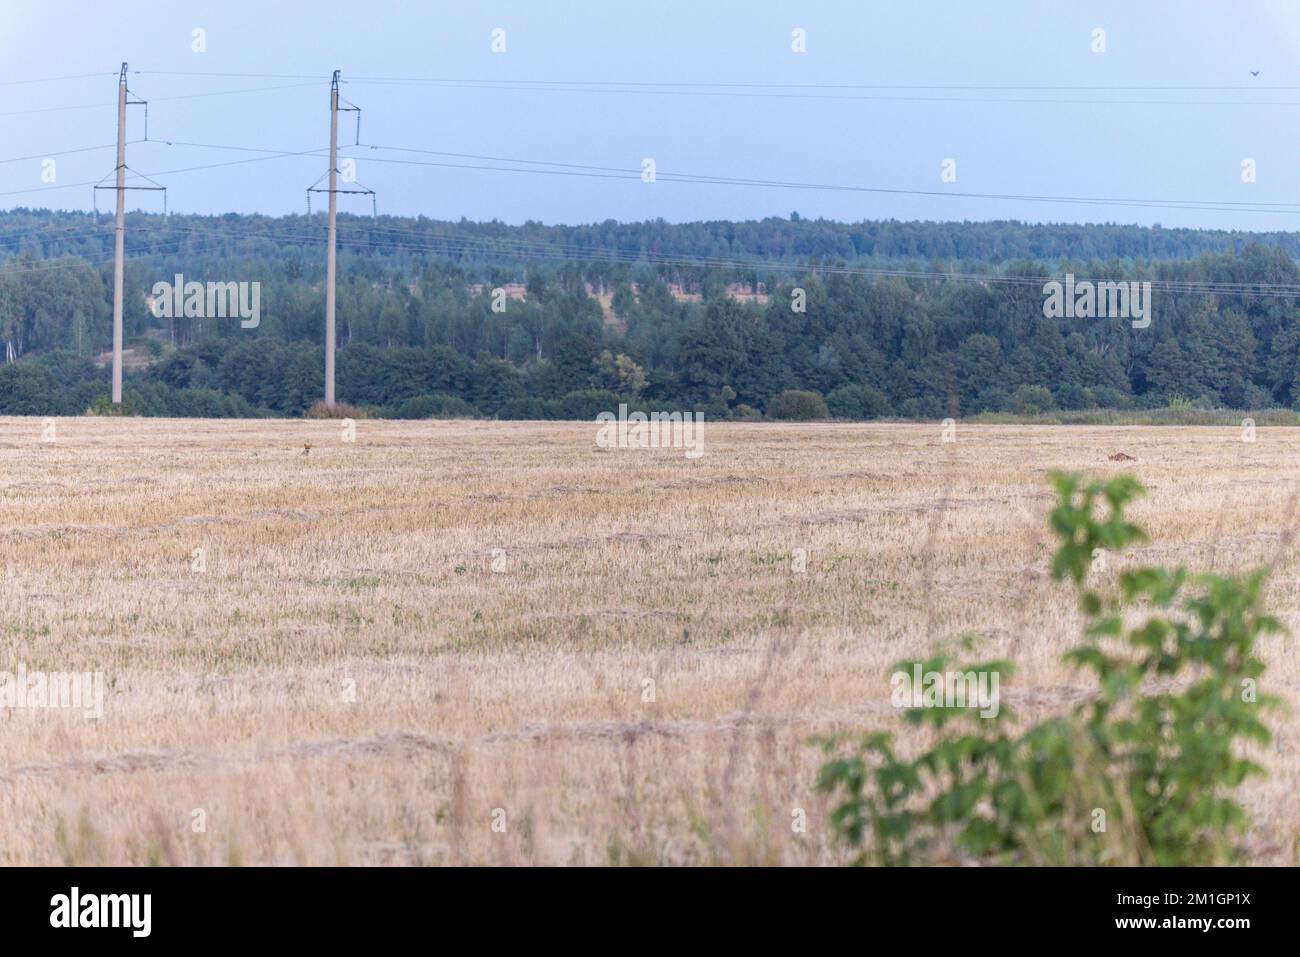 Vulpes vulpes, volpe rossa. L'ussia, la regione di Ryazan (l'oblast di Ryazanskaya), il distretto di Pronsky, Kisva. Foto Stock